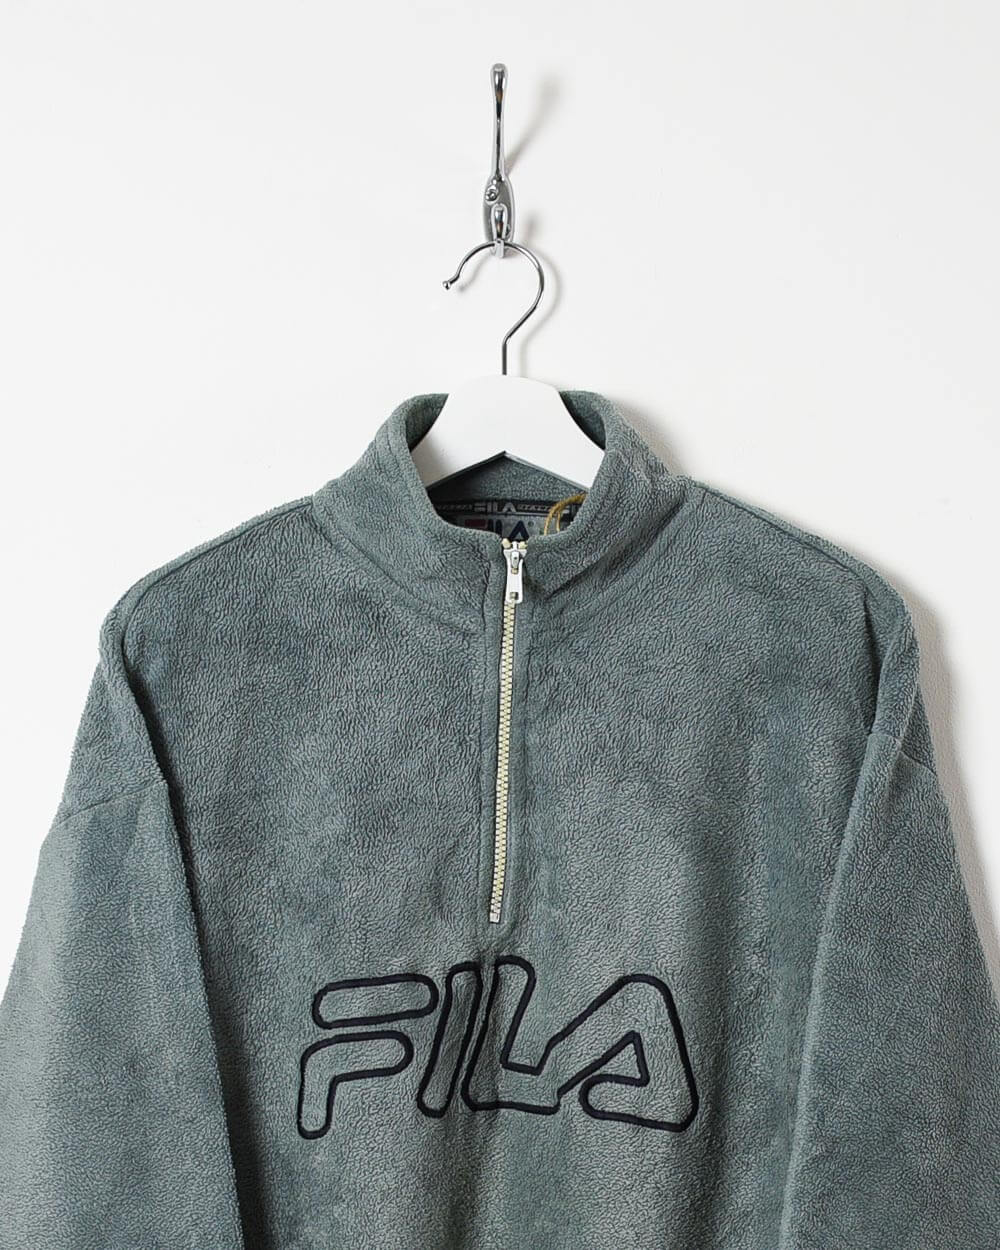 Grey Fila 1/4 Zip Fleece - Large